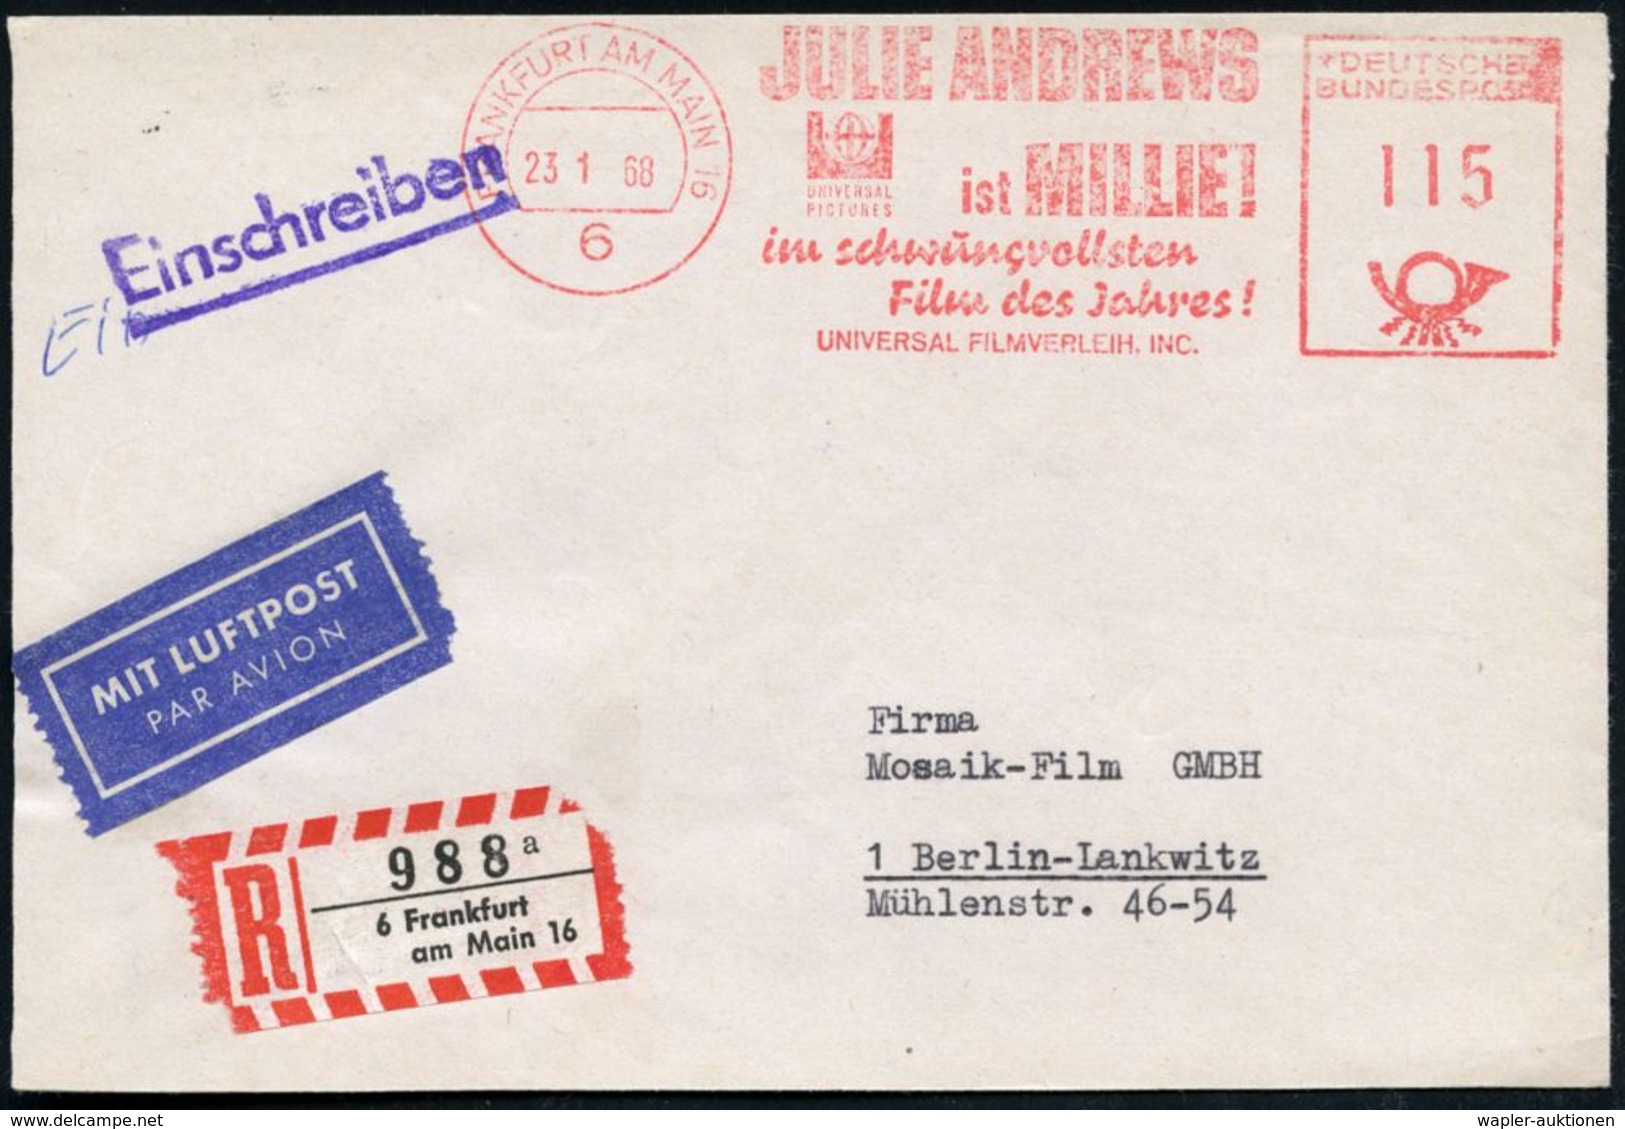 6 FRANKFURT AM MAIN 16/ JULIE ANDREWS/ Ist MILLIE!/ ..UNIVERSAL FILMVERLEIH INC. 1968 (23.1.) AFS 115 Pf. + RZ: 6 Frankf - Film